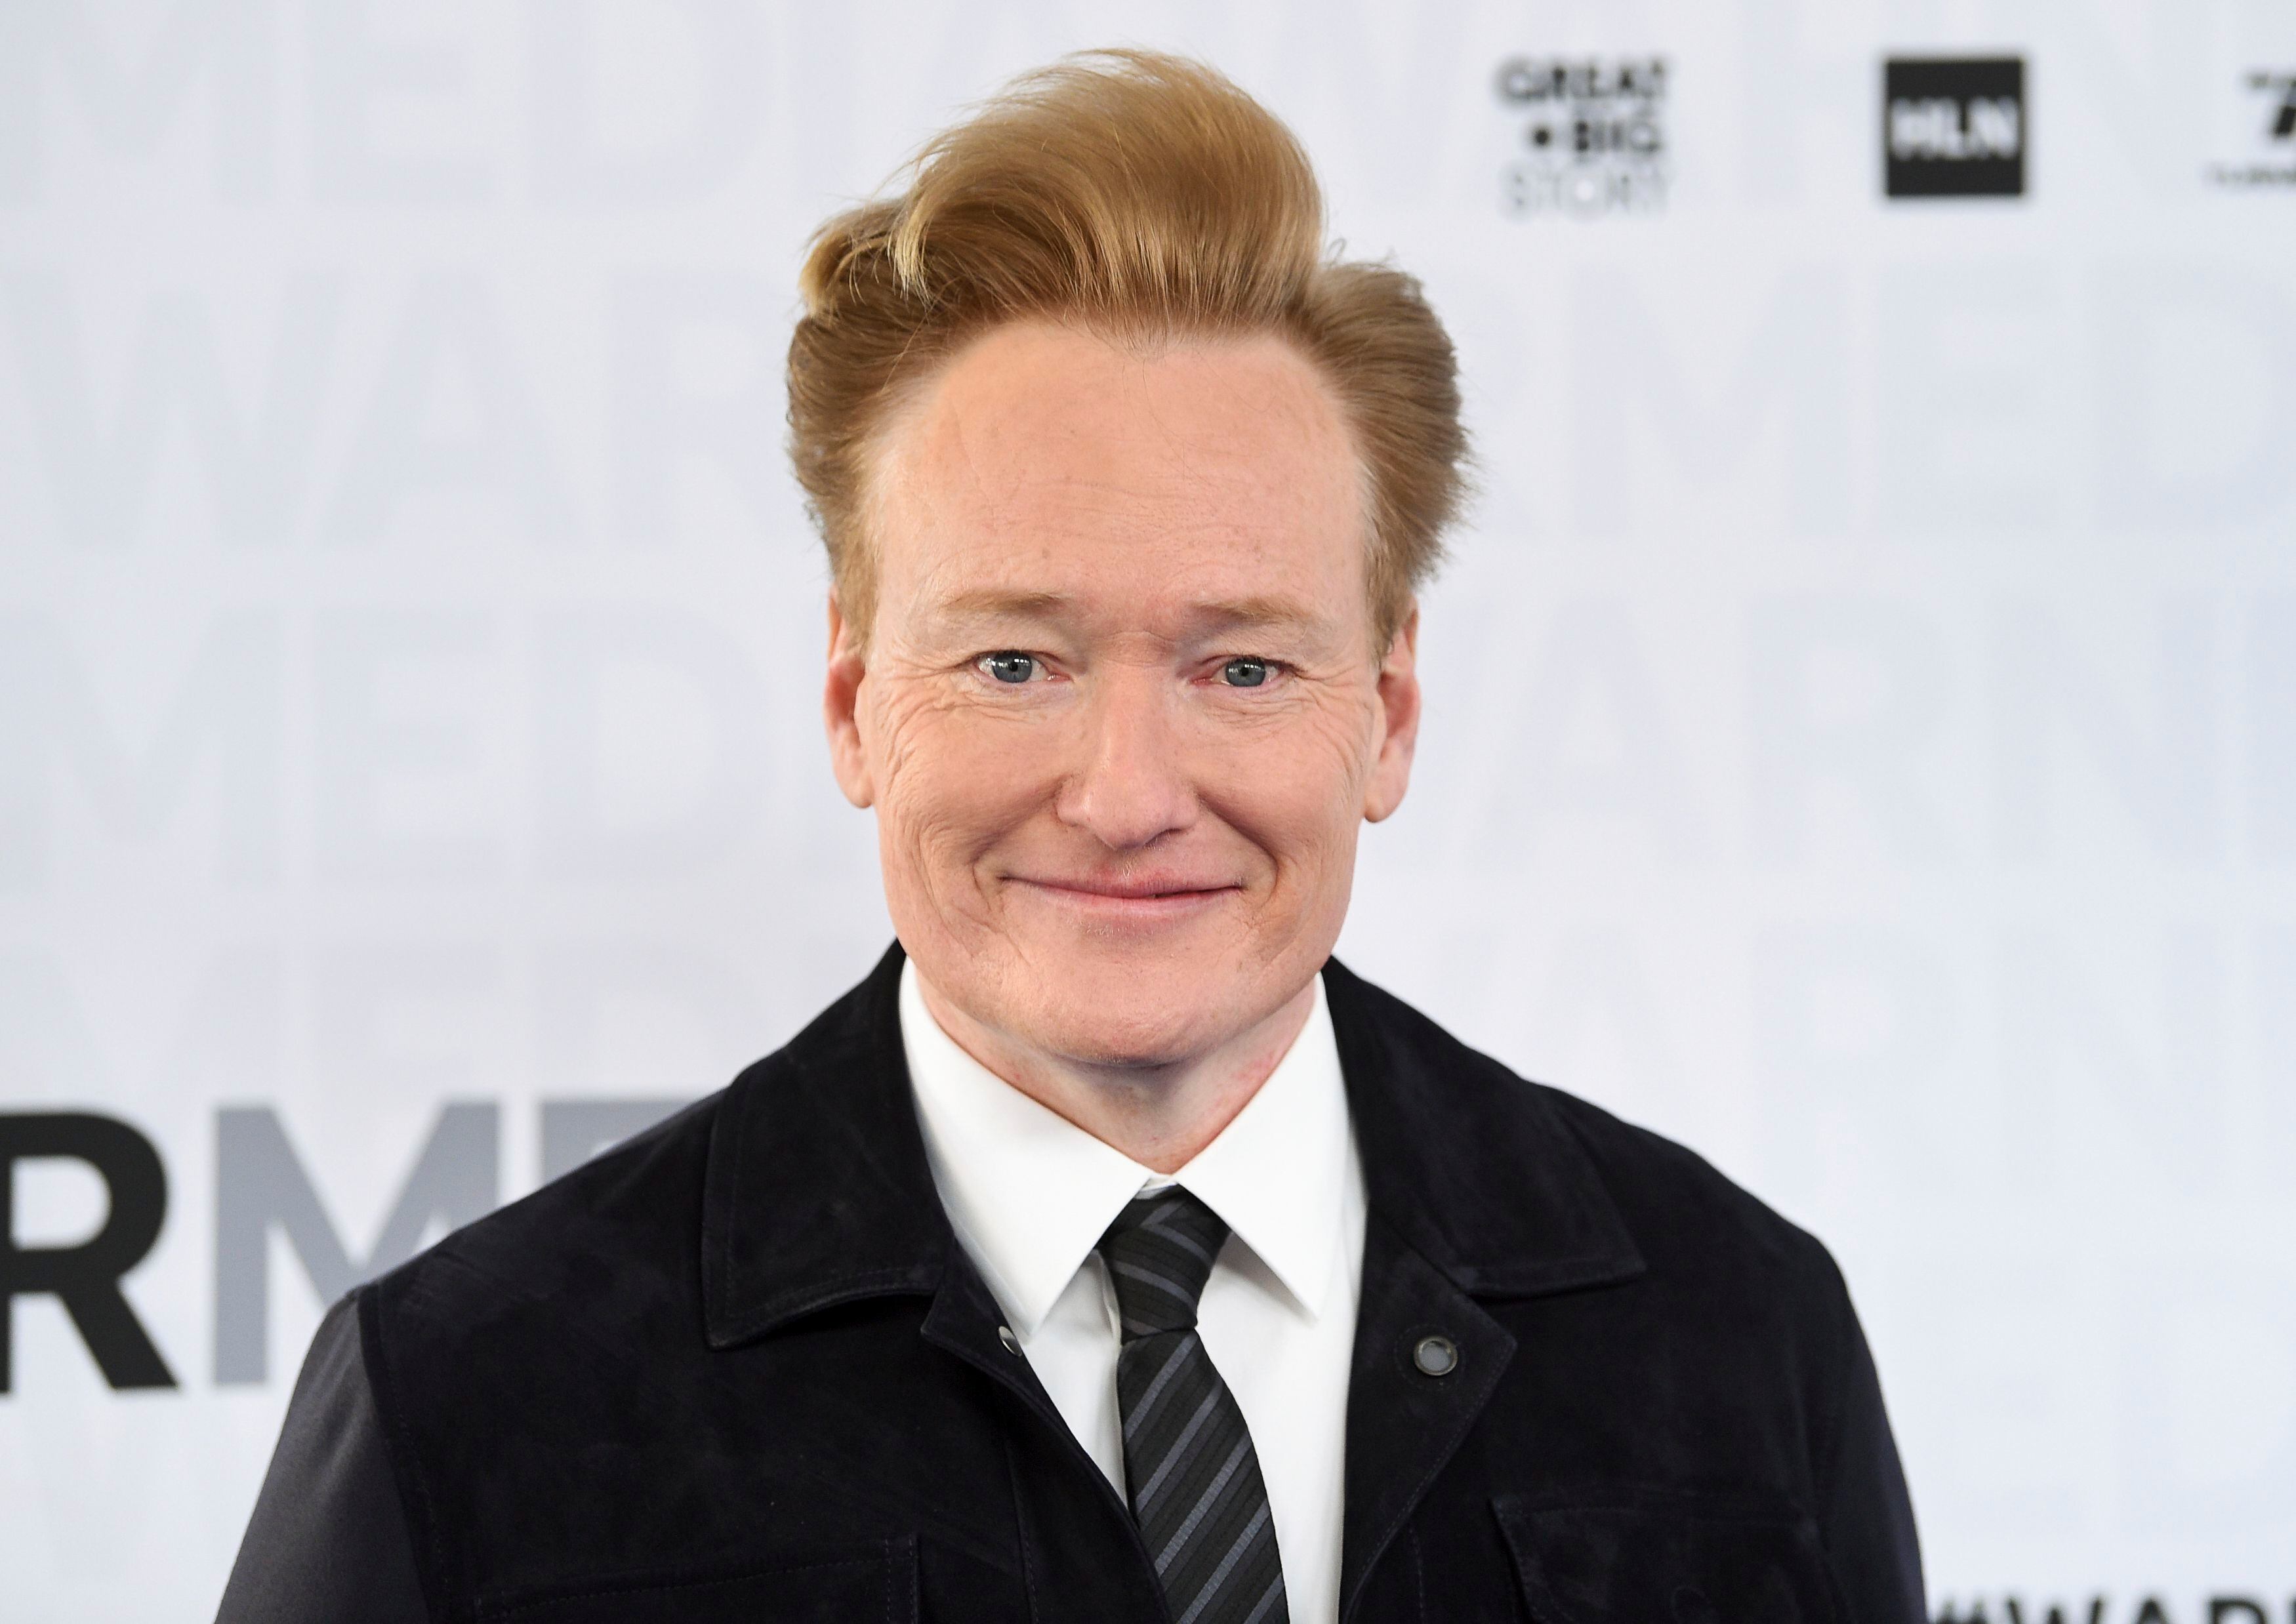 Conan O’Brien ends TBS late-night show with snark, gratitude